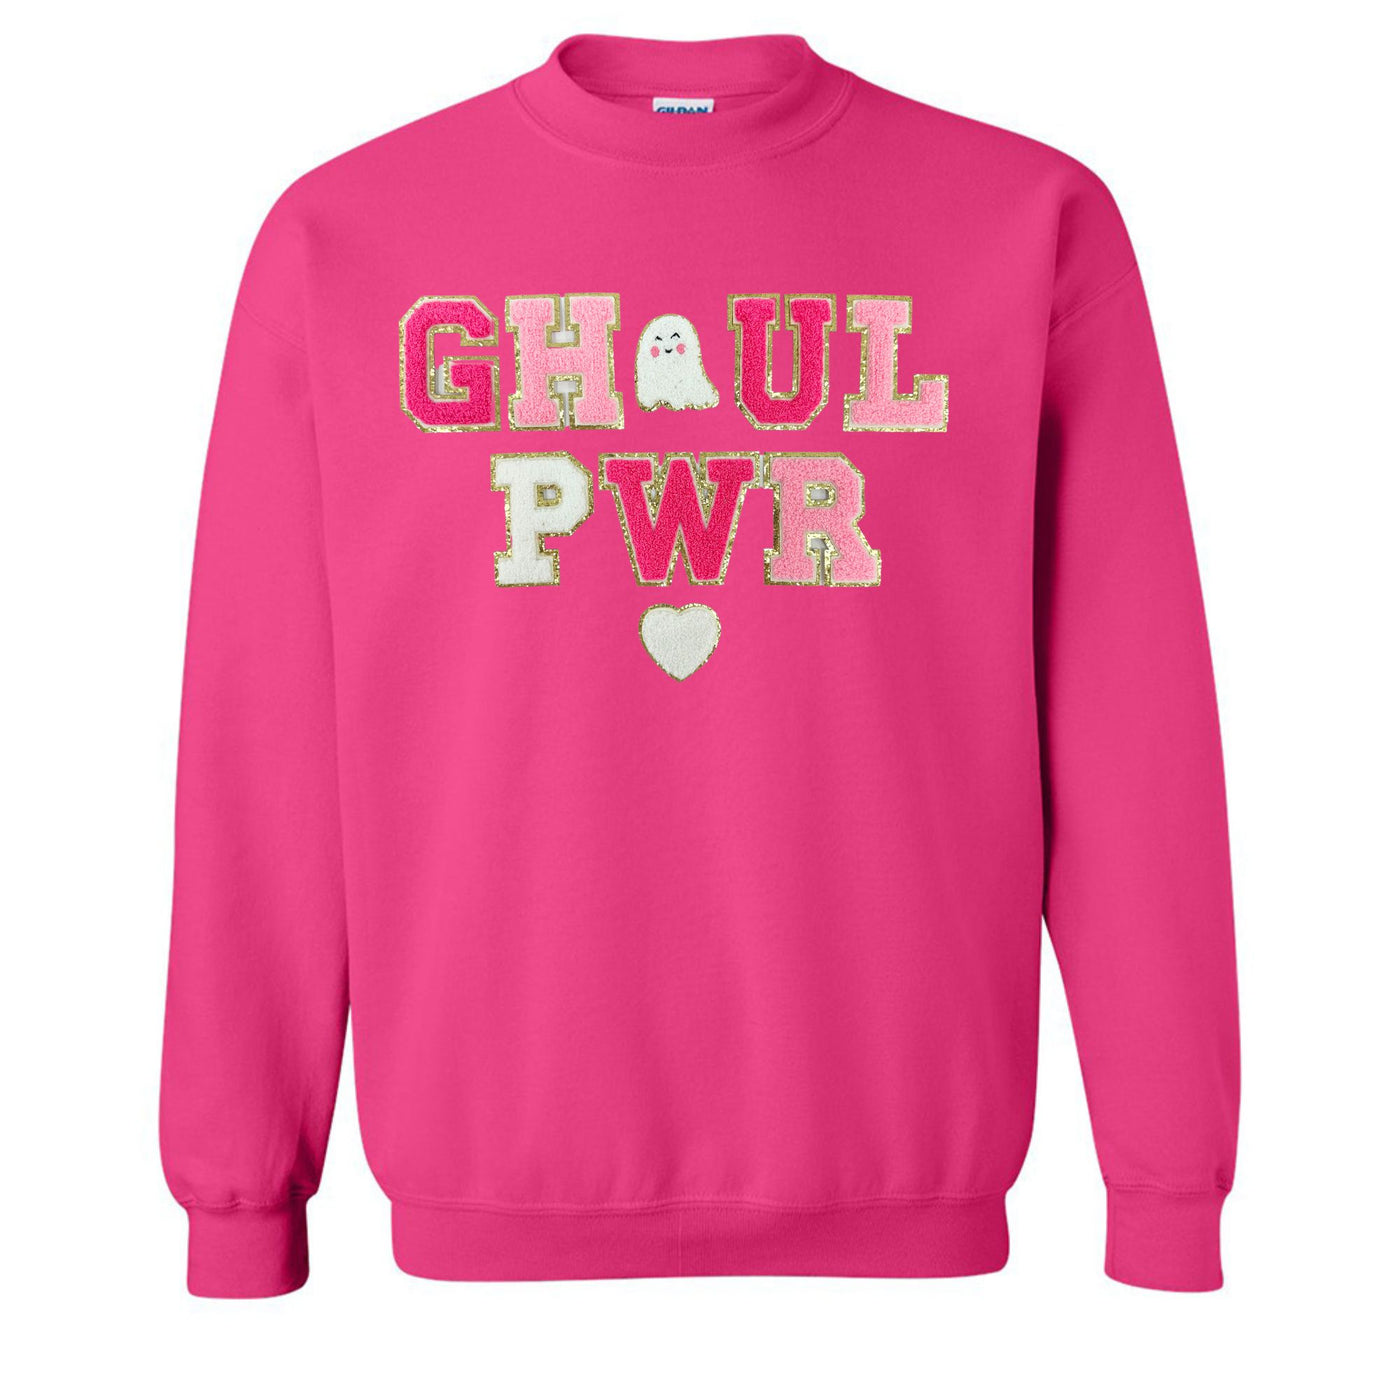 'Ghoul Pwr' Letter Patch Crewneck Sweatshirt